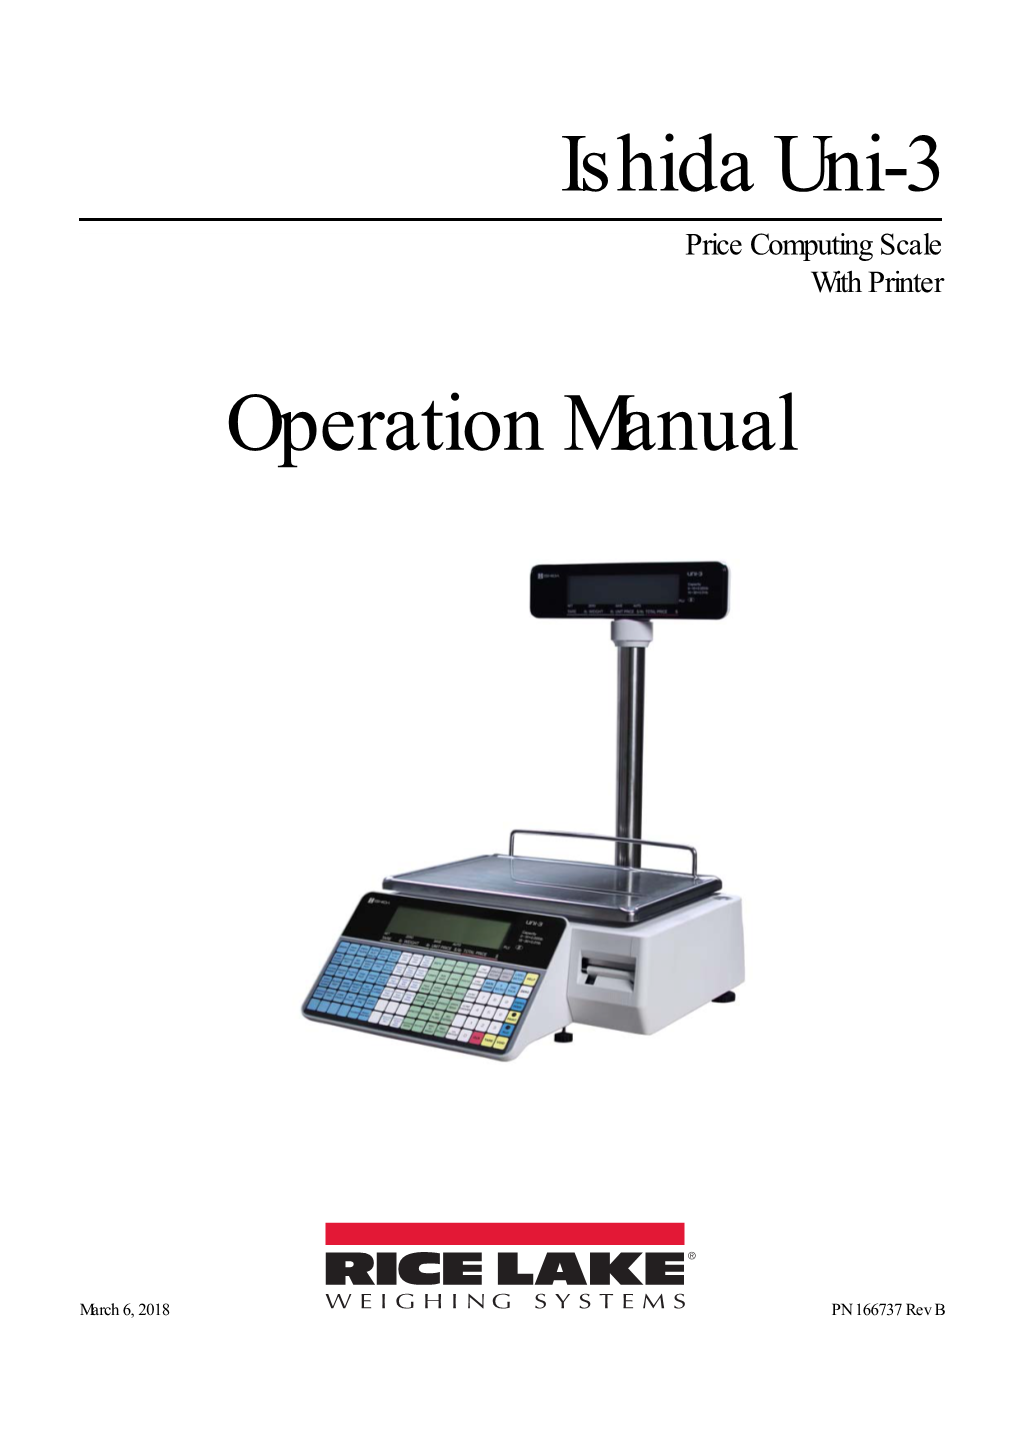 Ishida Uni-3 Price Computing Scale with Printer Operation Manual